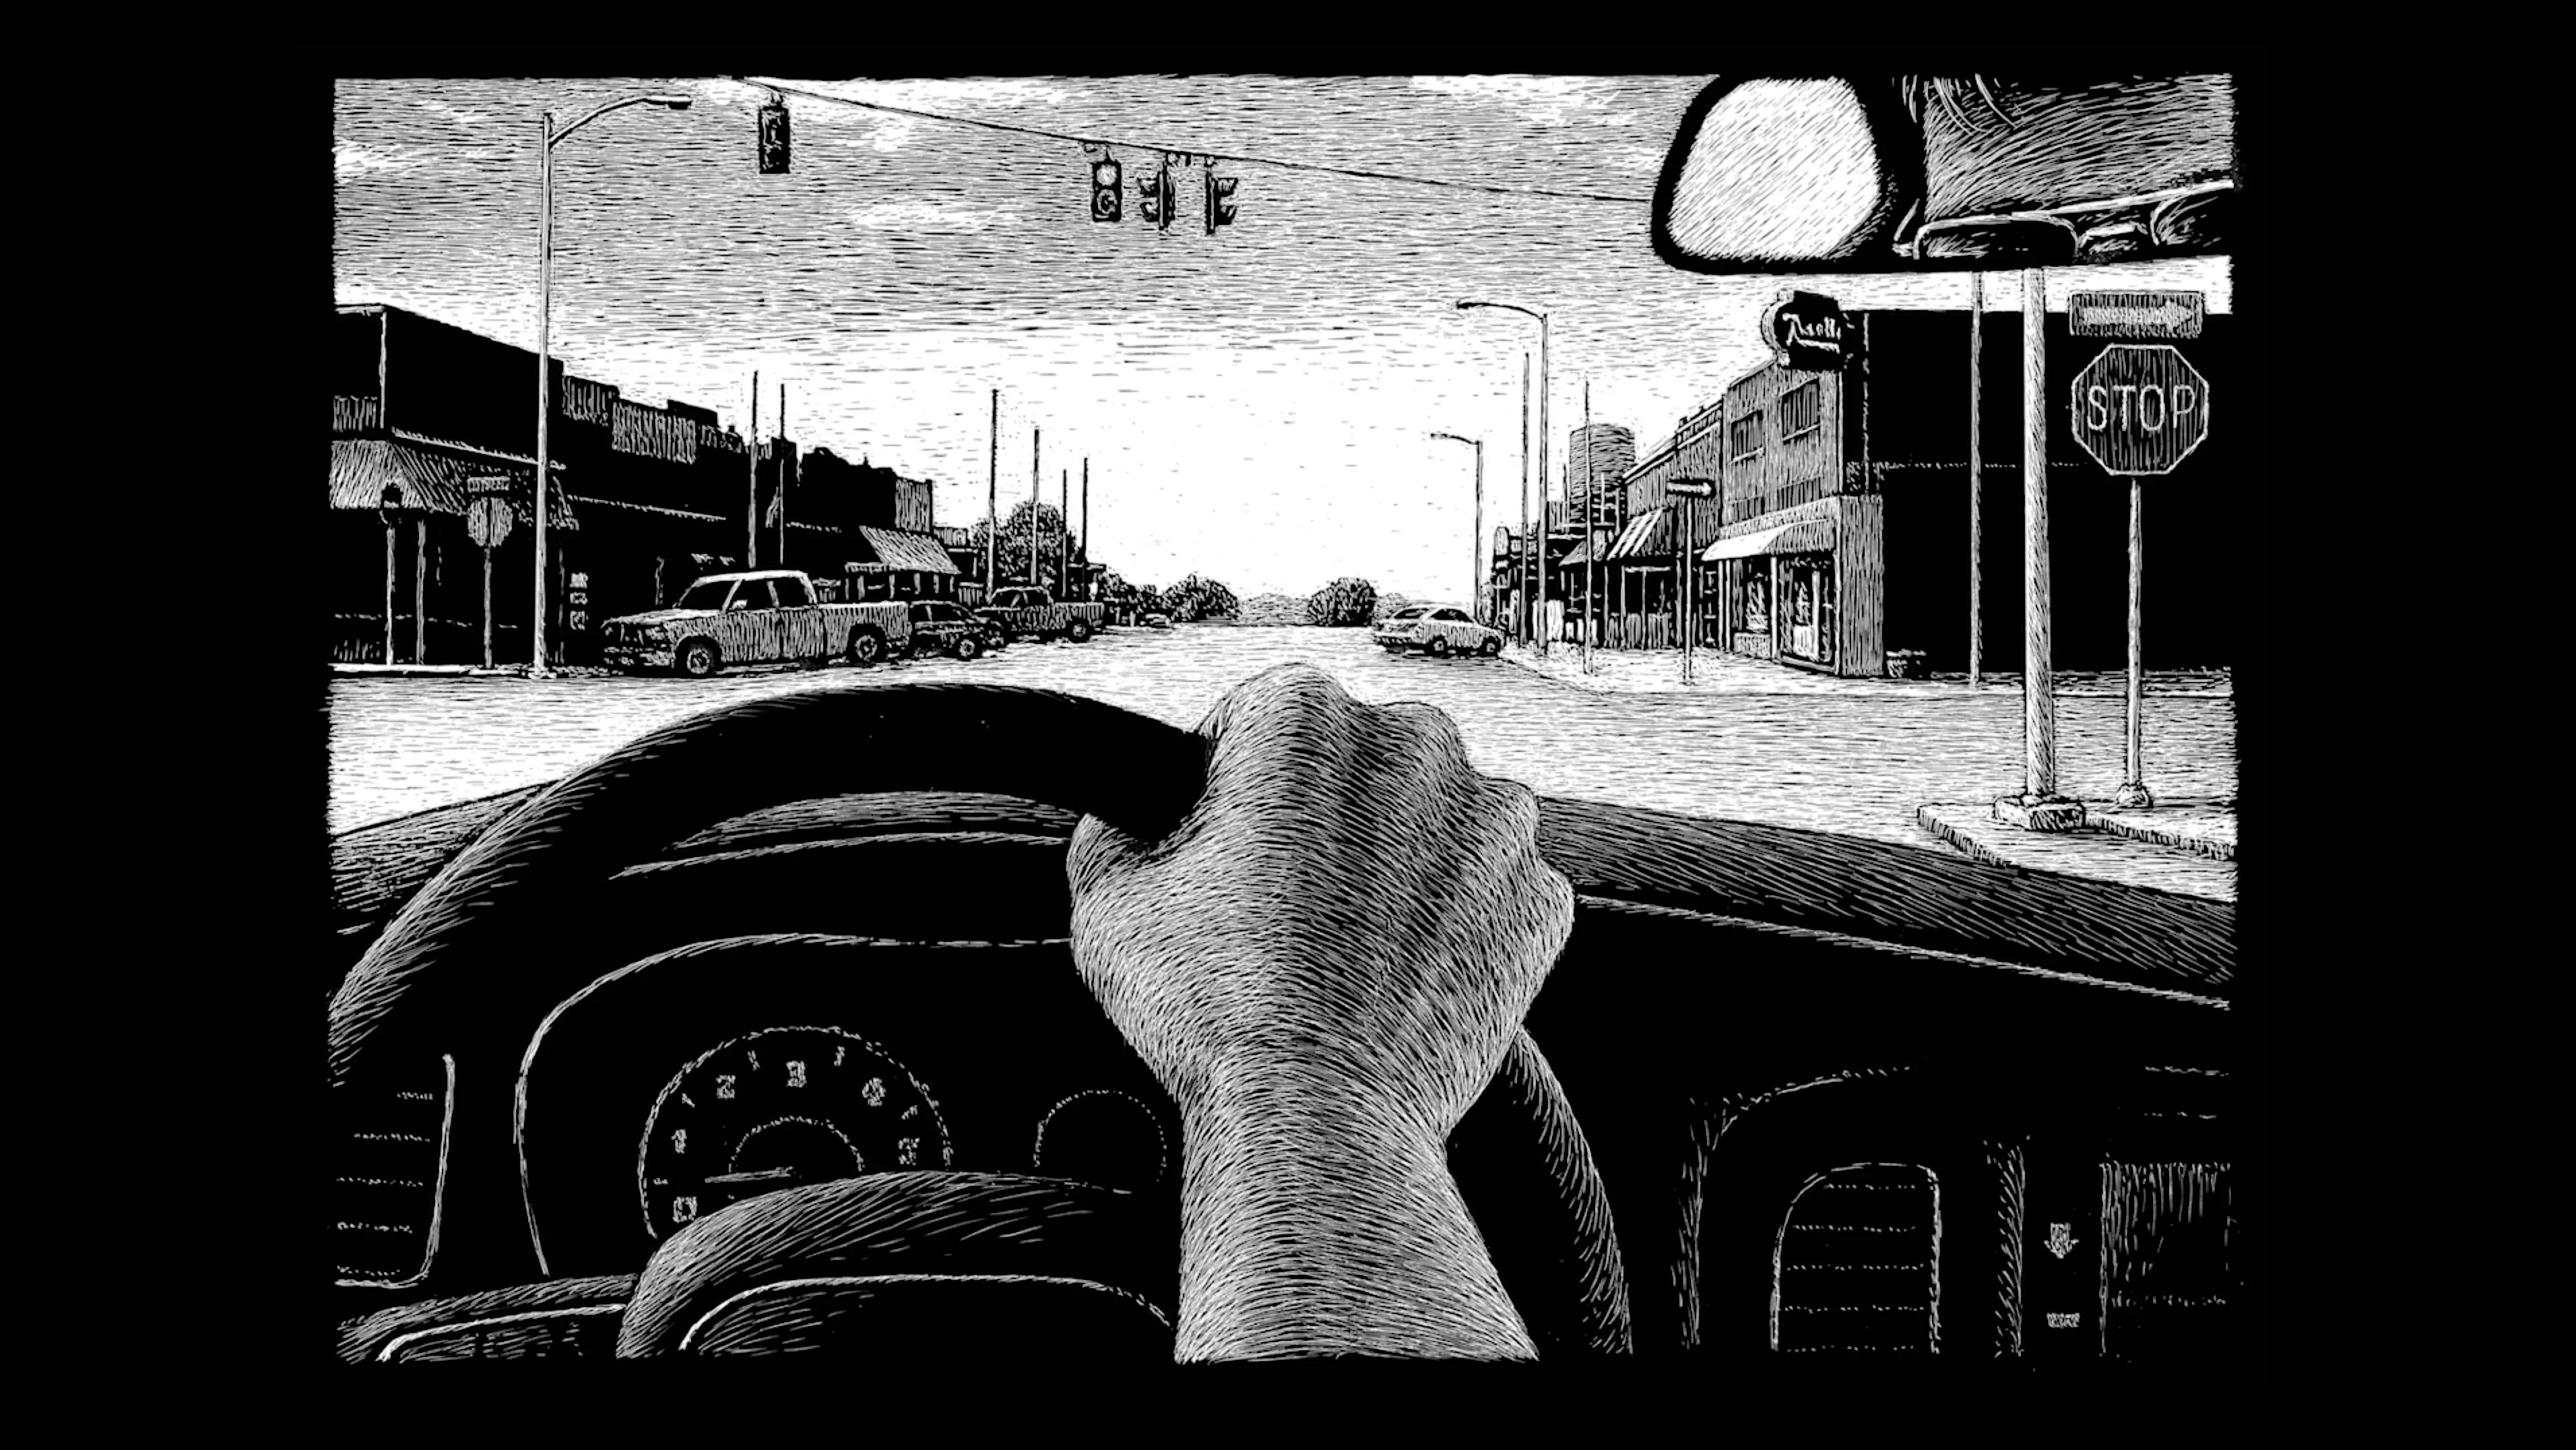 Route 66 Scratchboards x Thomas Ott on Vimeo